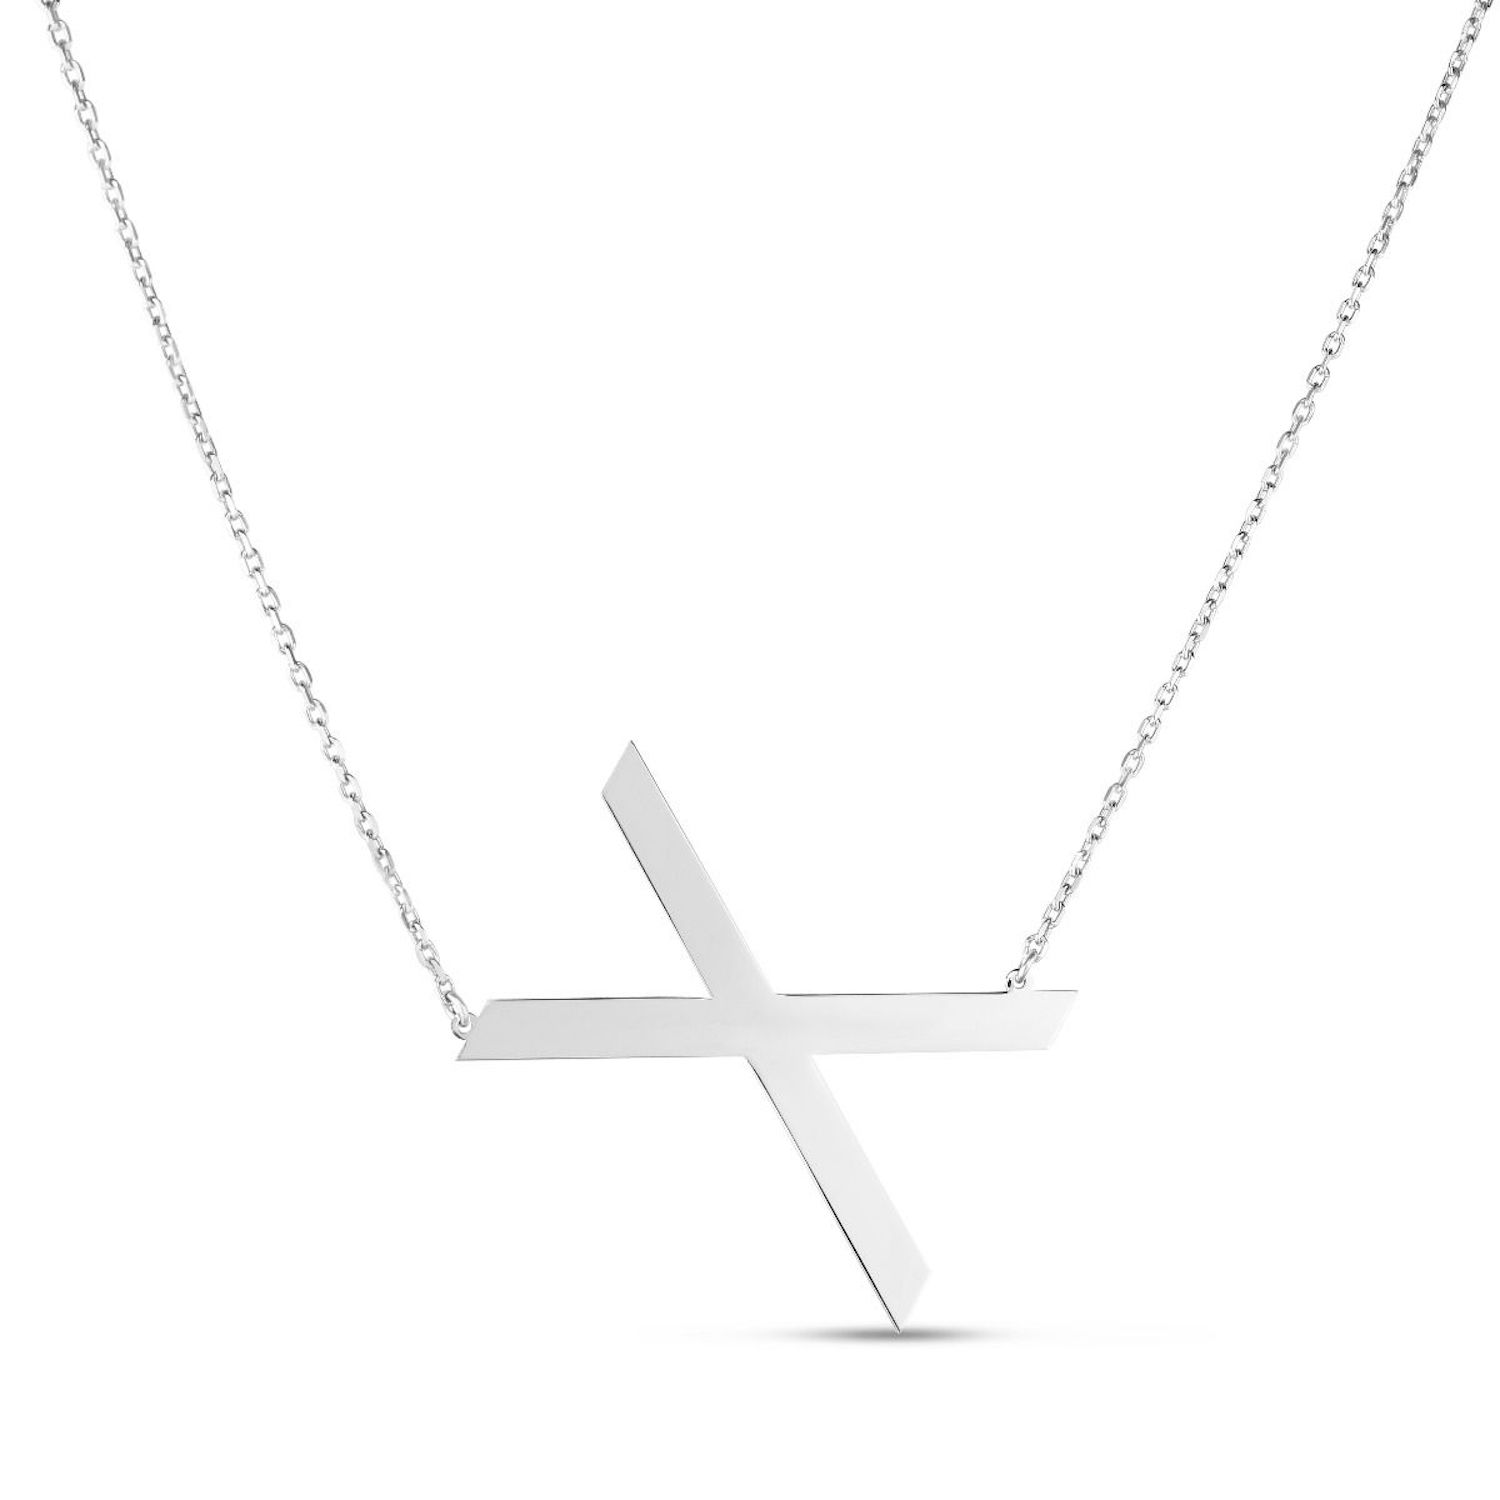 Sterling Silver Sideways Initials Letter Pendant Necklace 16"-18" Adj. 1.5" - X